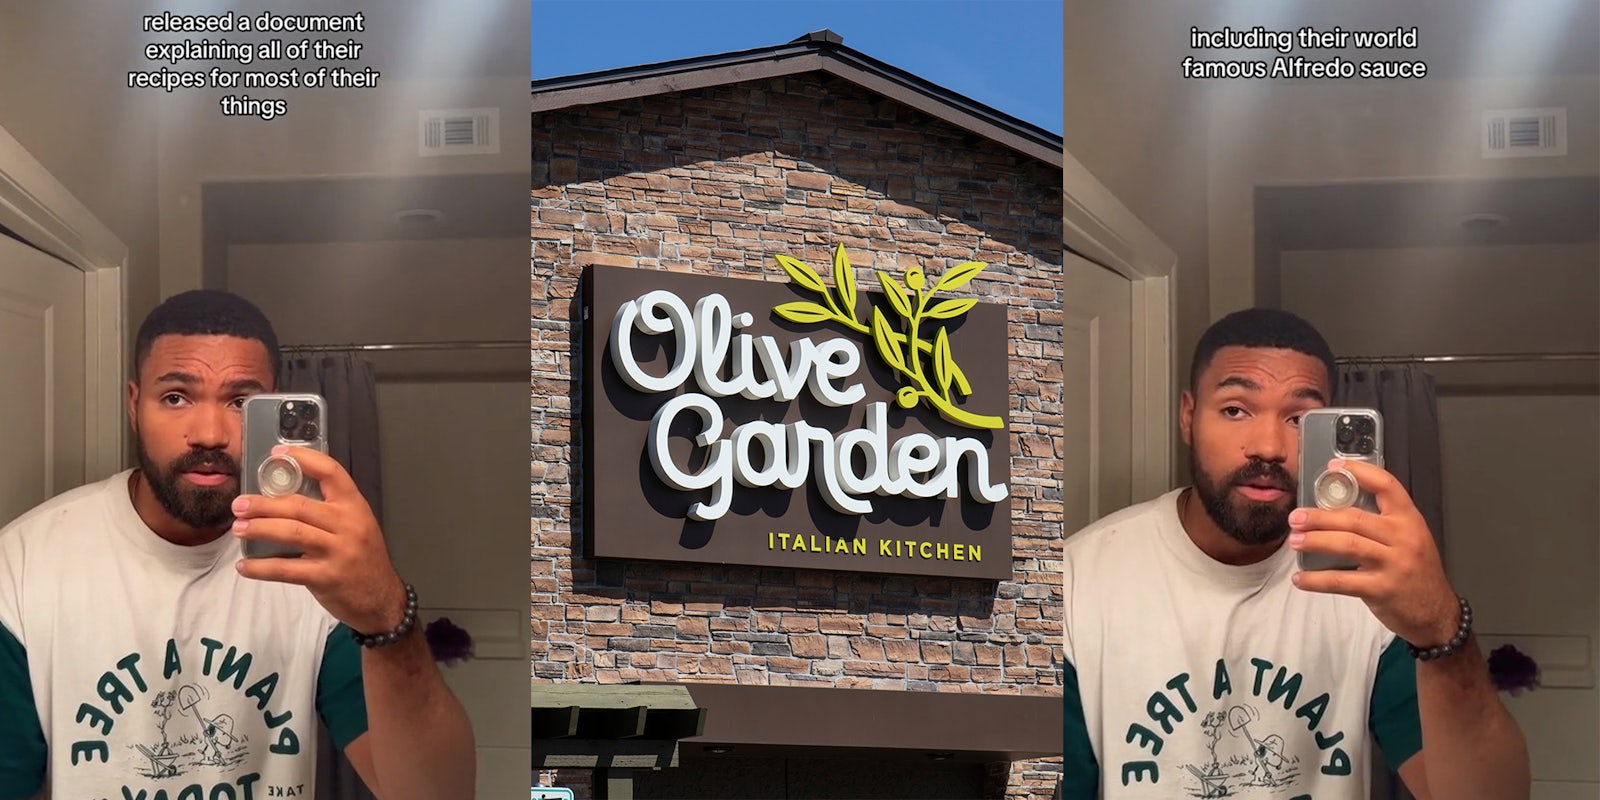 Customer reveals leaked Olive Garden alfredo sauce recipe